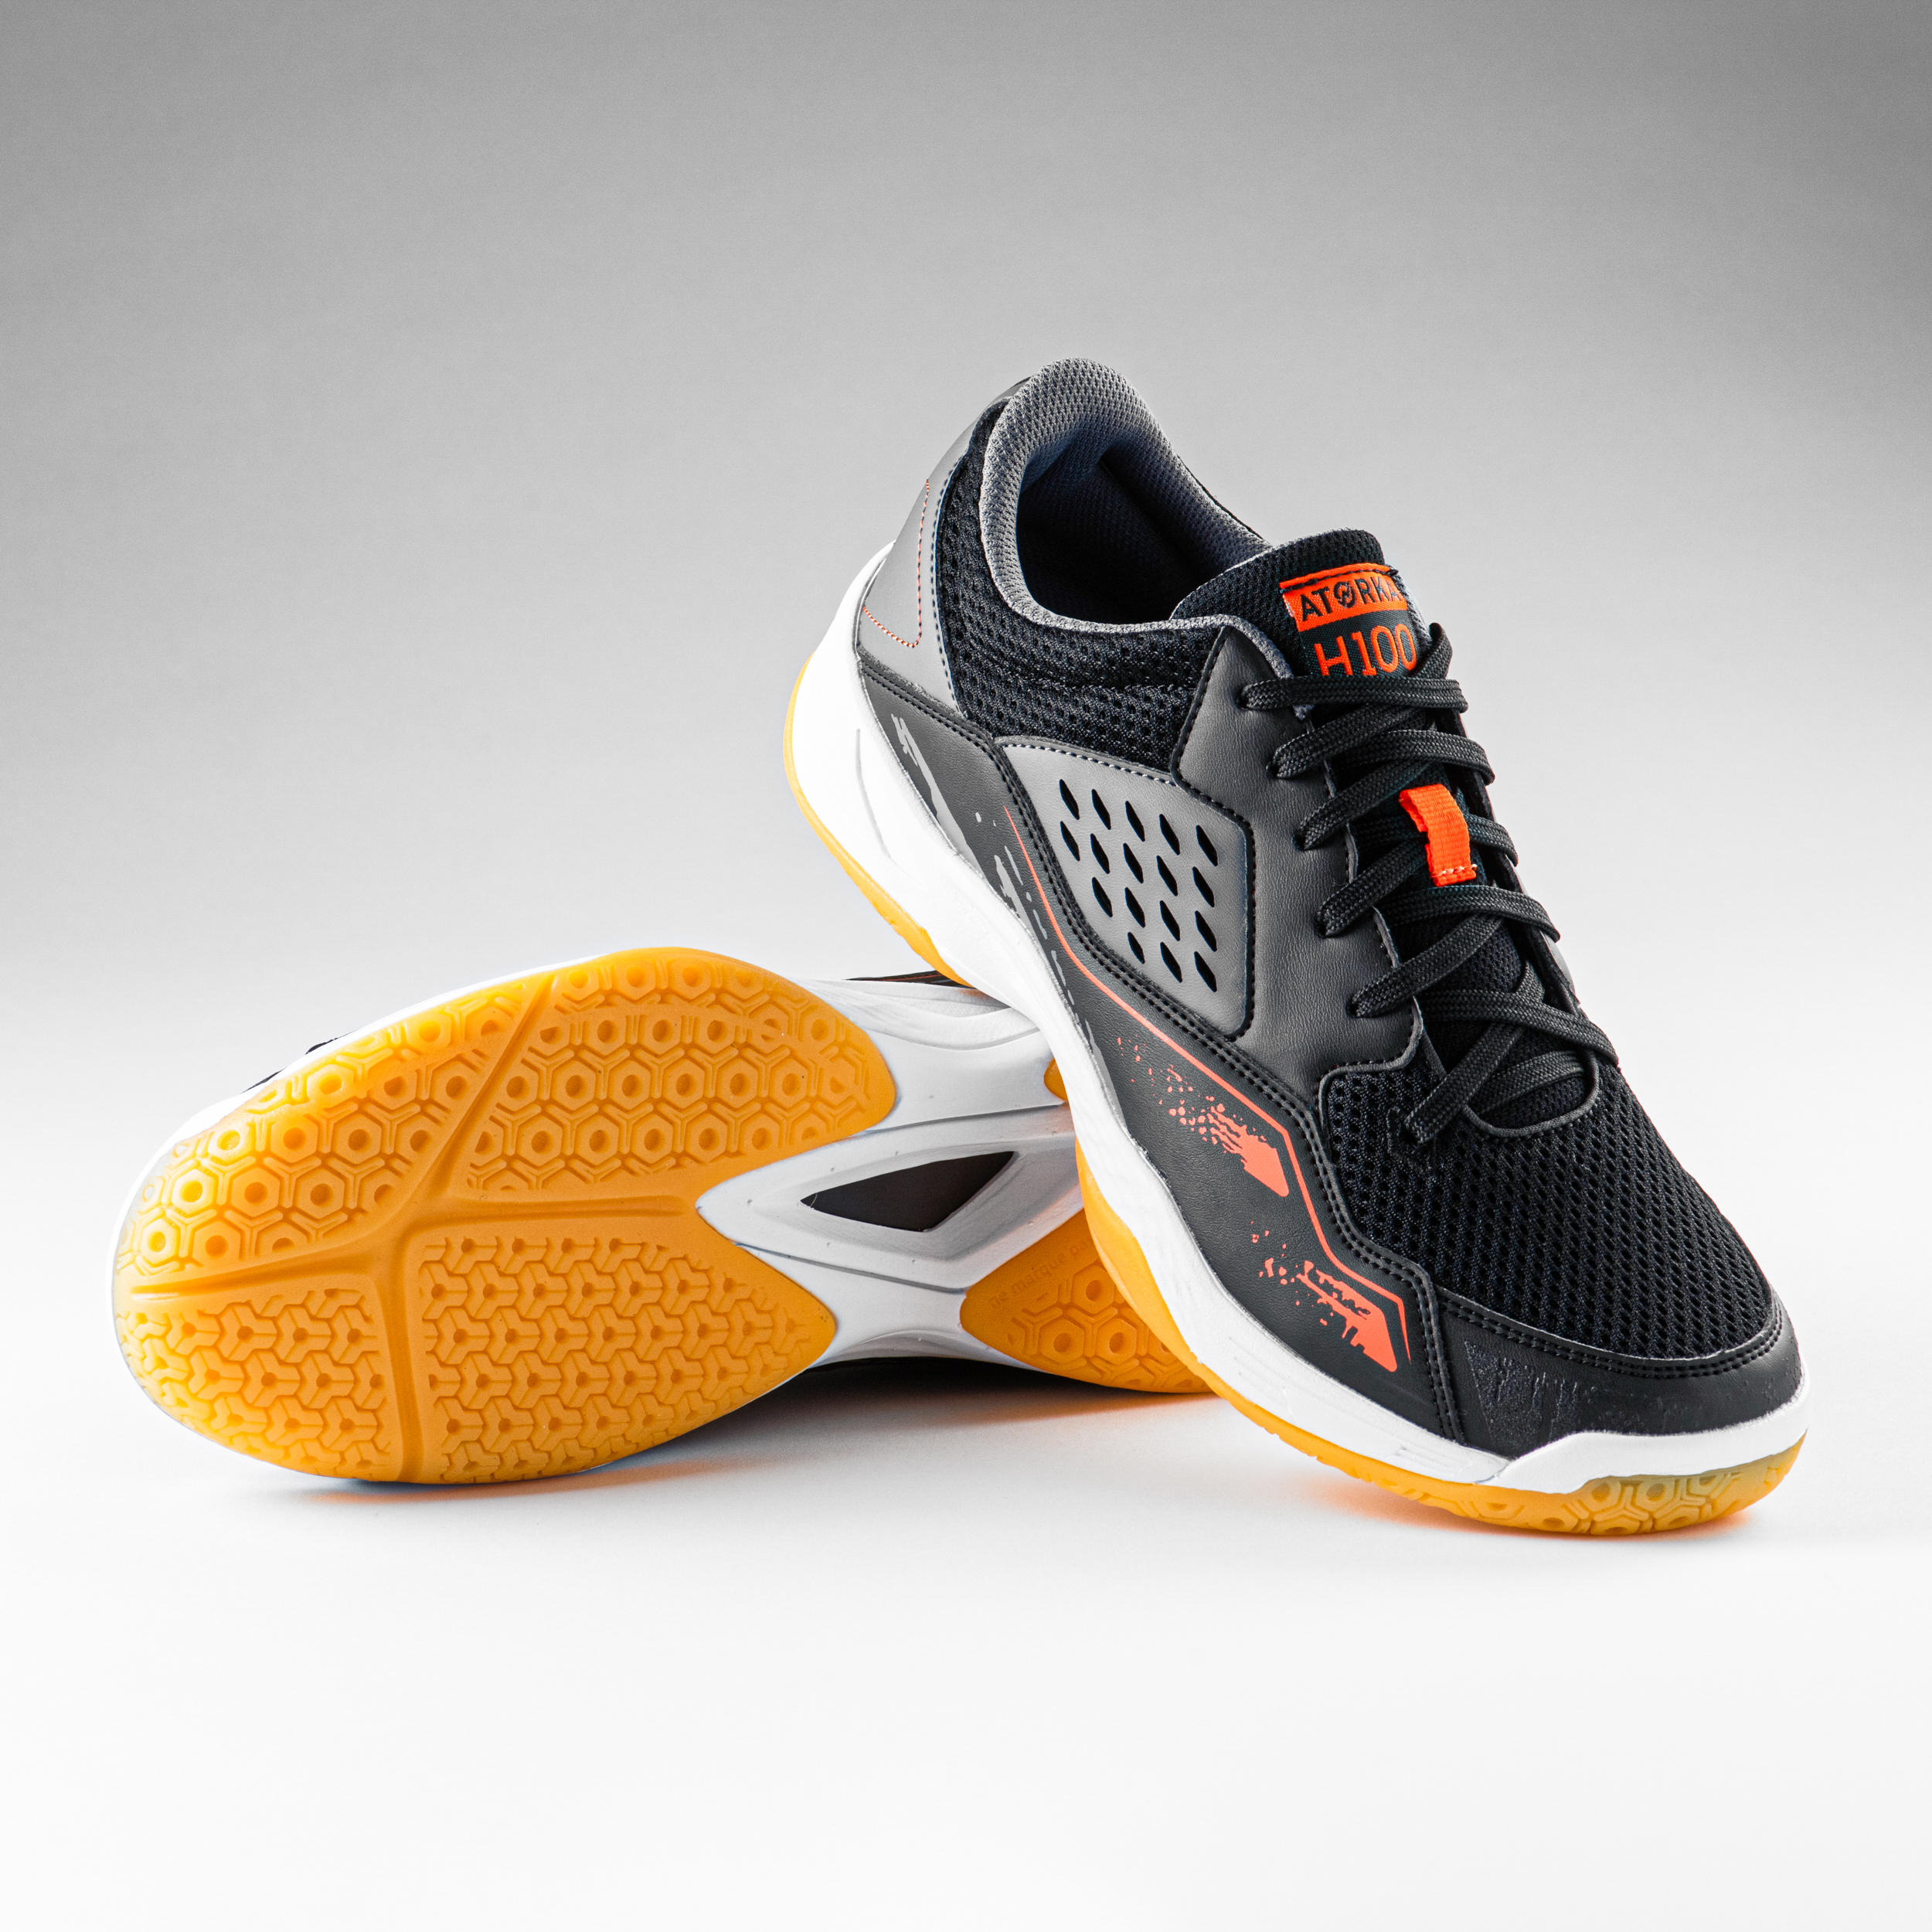 Men's Handball Shoes H100 - Grey/Black/Orange 6/8